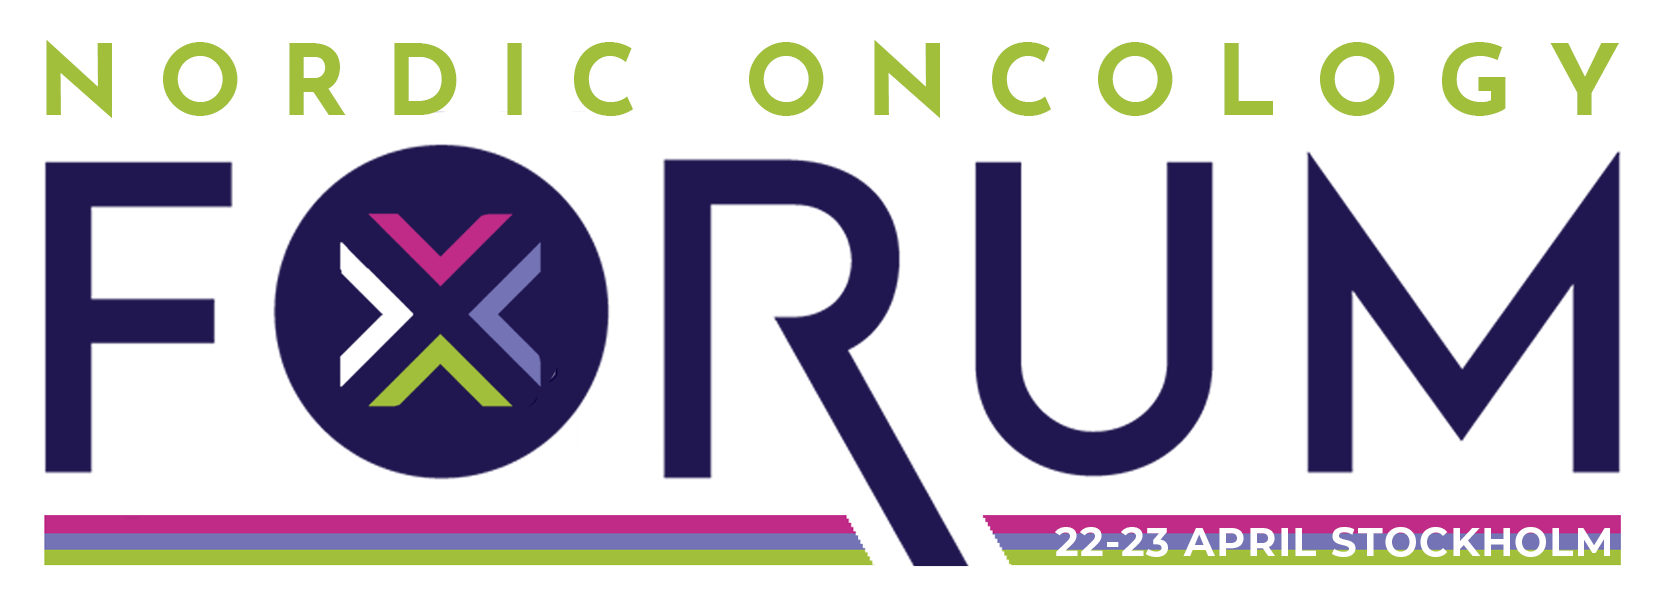 Nordic Oncology logo_final